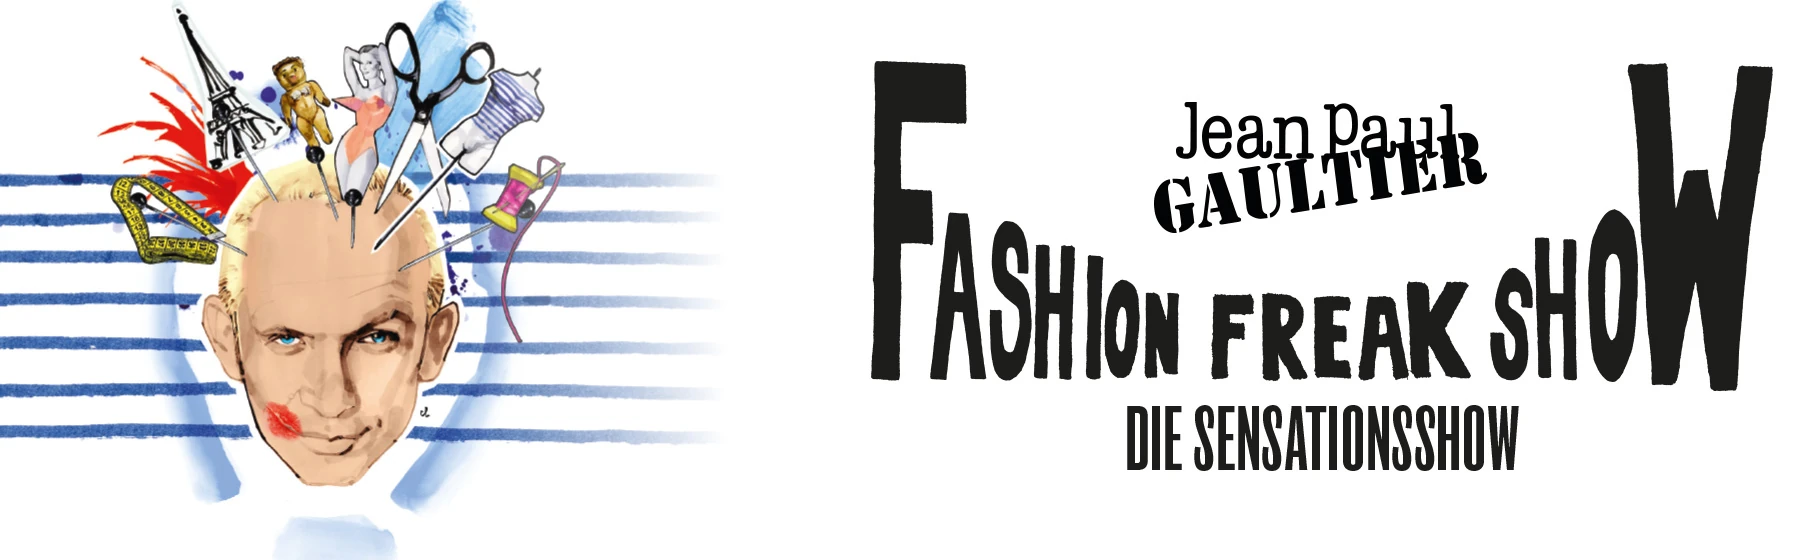 Jean Paul Gaultier Fashion Freak Show - Coverbild quer mit Logo